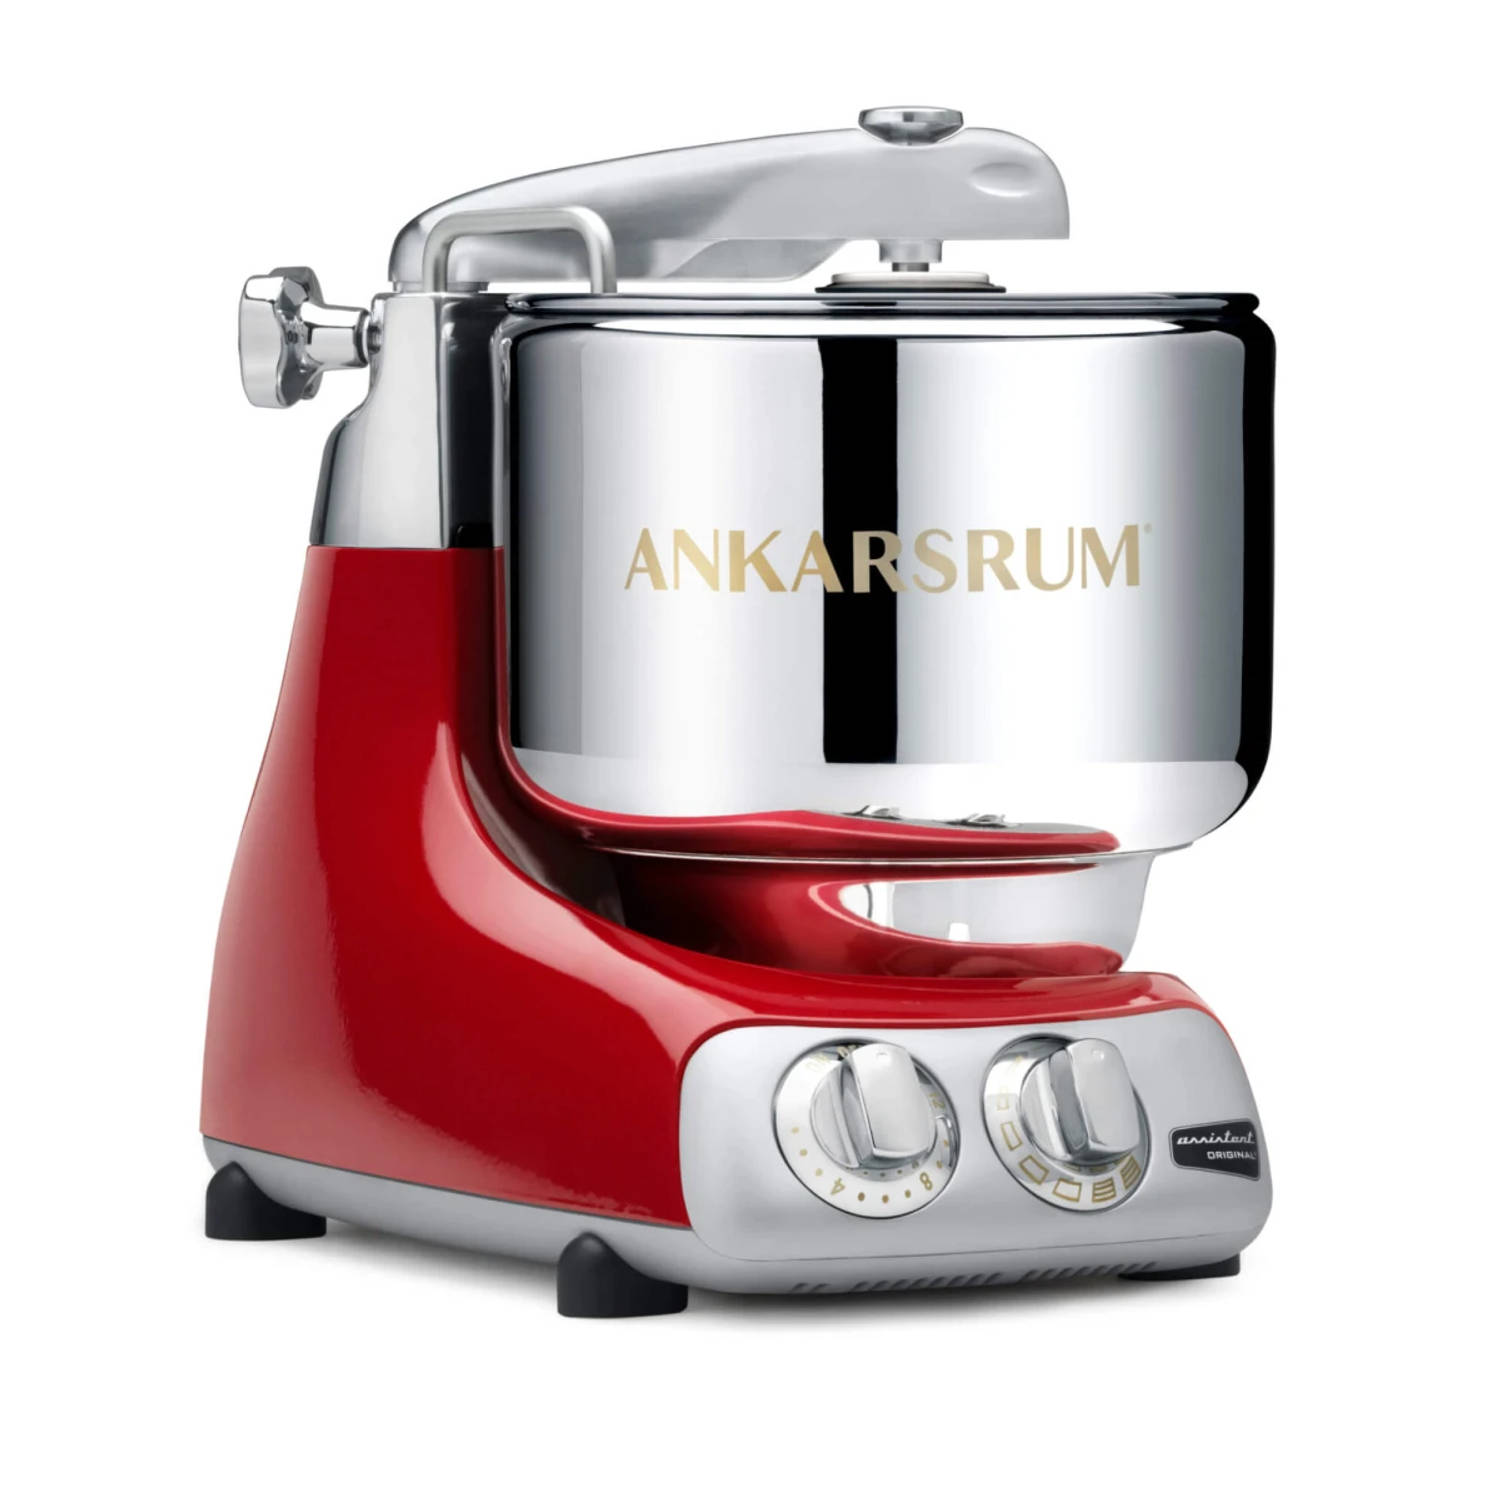 Ankarsrum Assistent Original AKR6230 keukenmachine - rood - 7 L